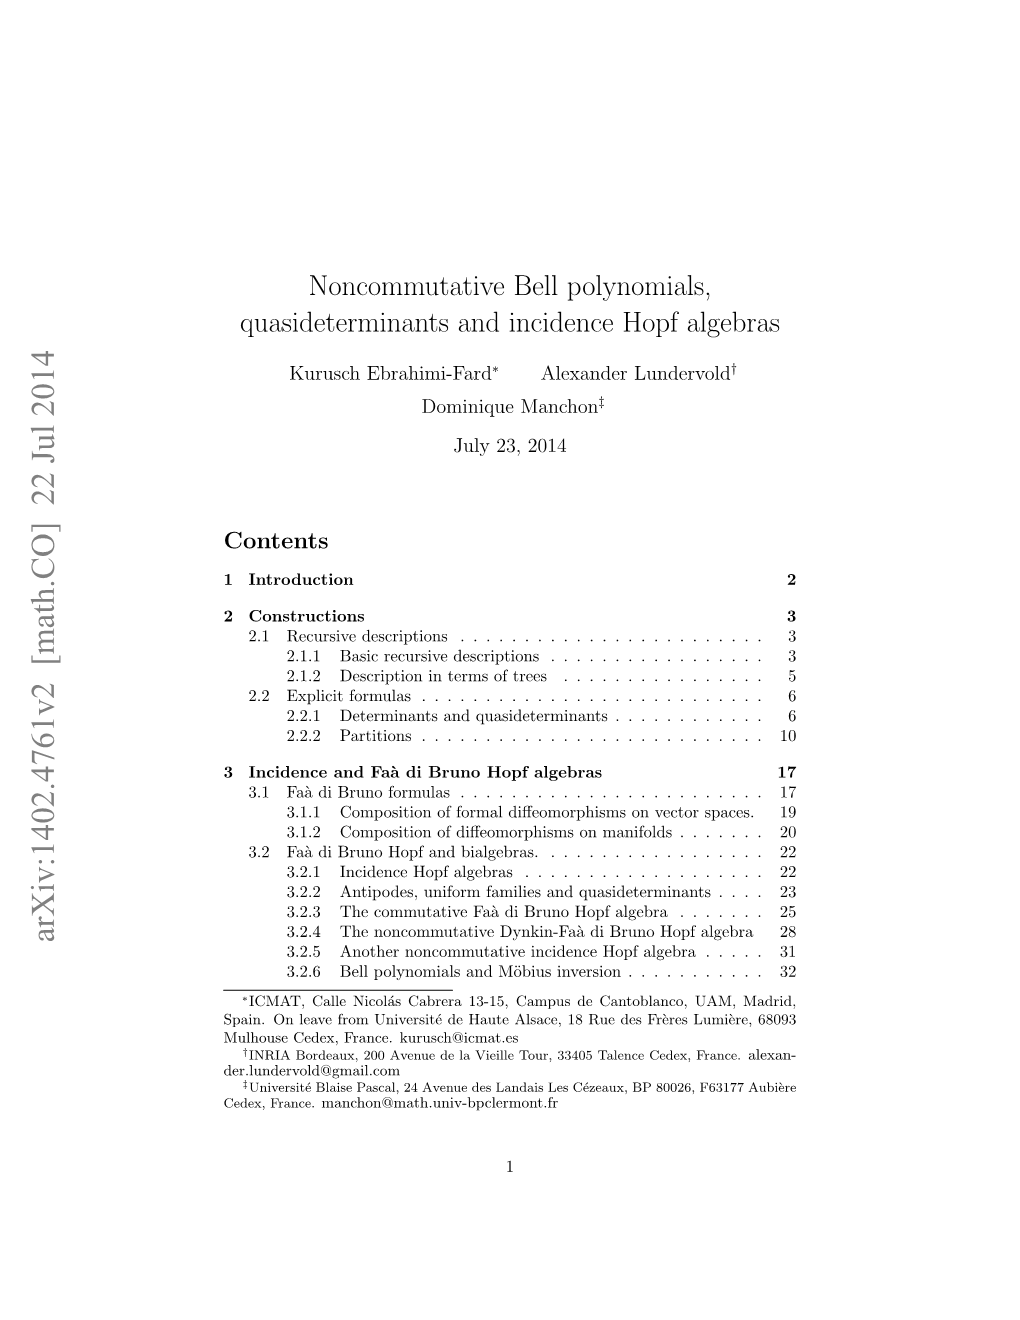 Noncommutative Bell Polynomials, Quasideterminants and Incidence Hopf Algebras